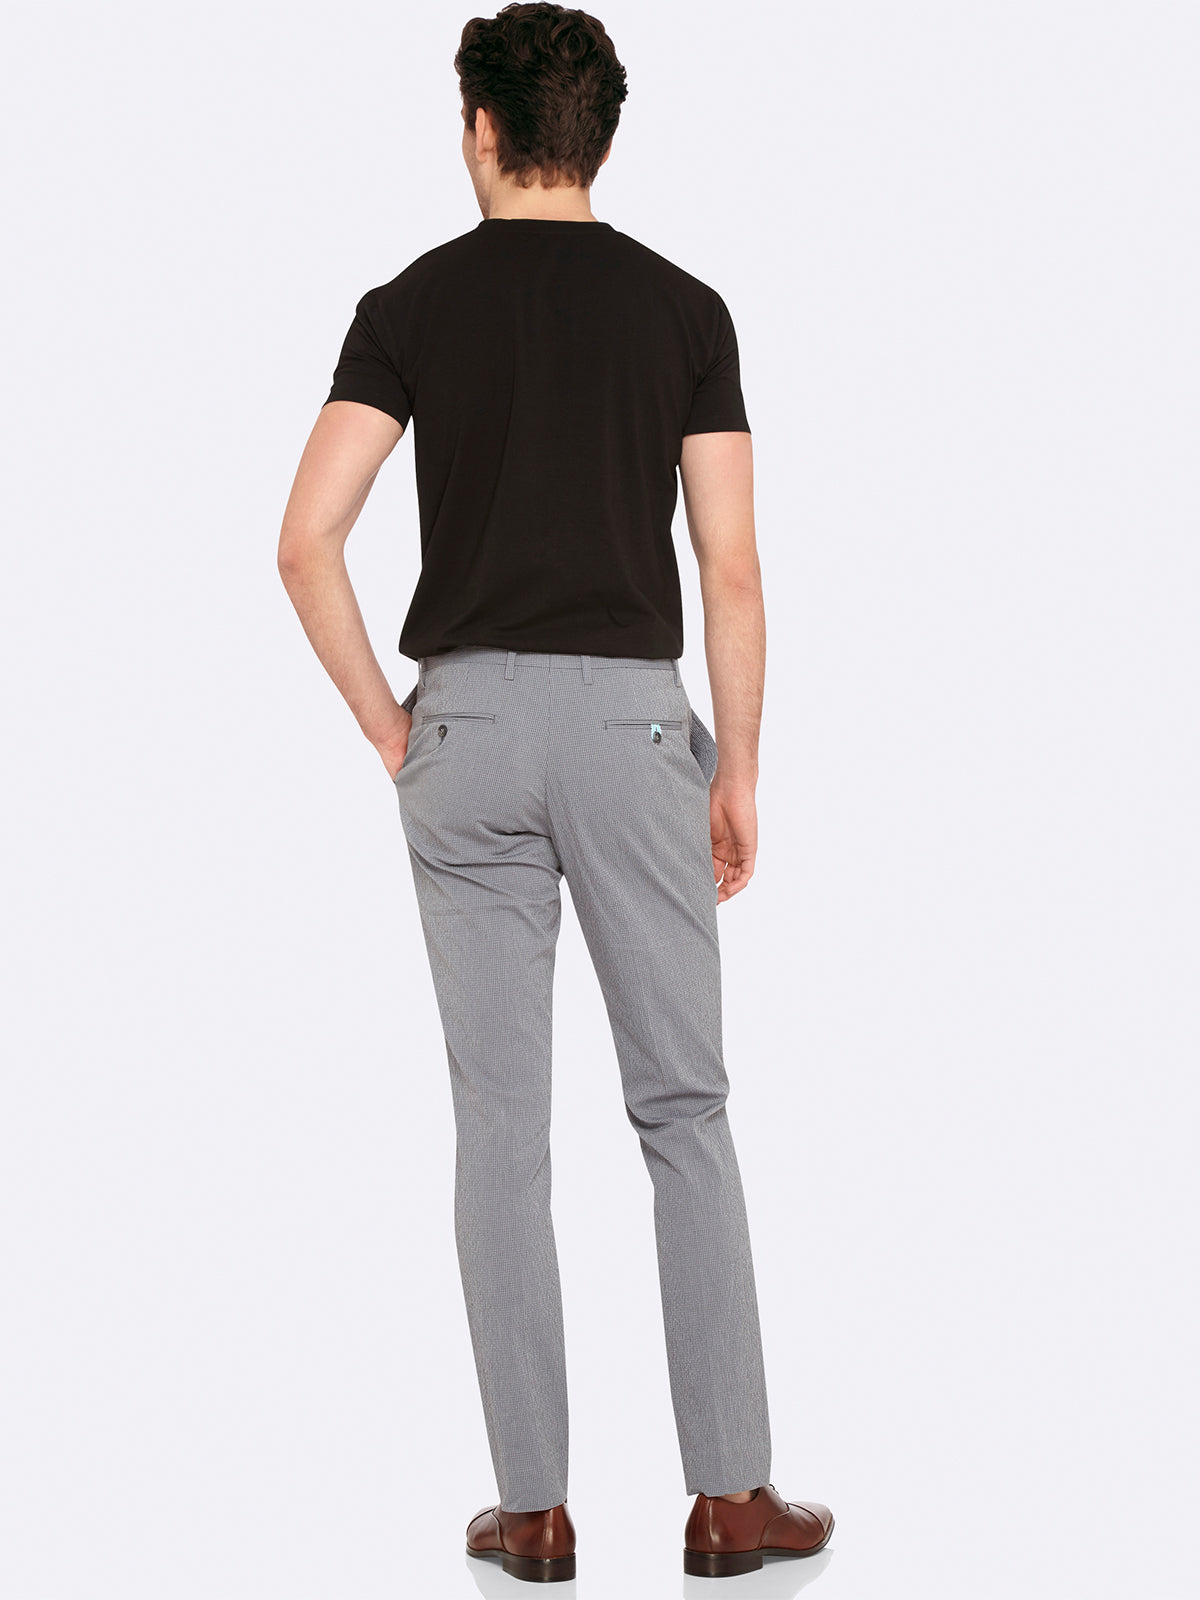 Buy Men Grey Tailored Trousers Online